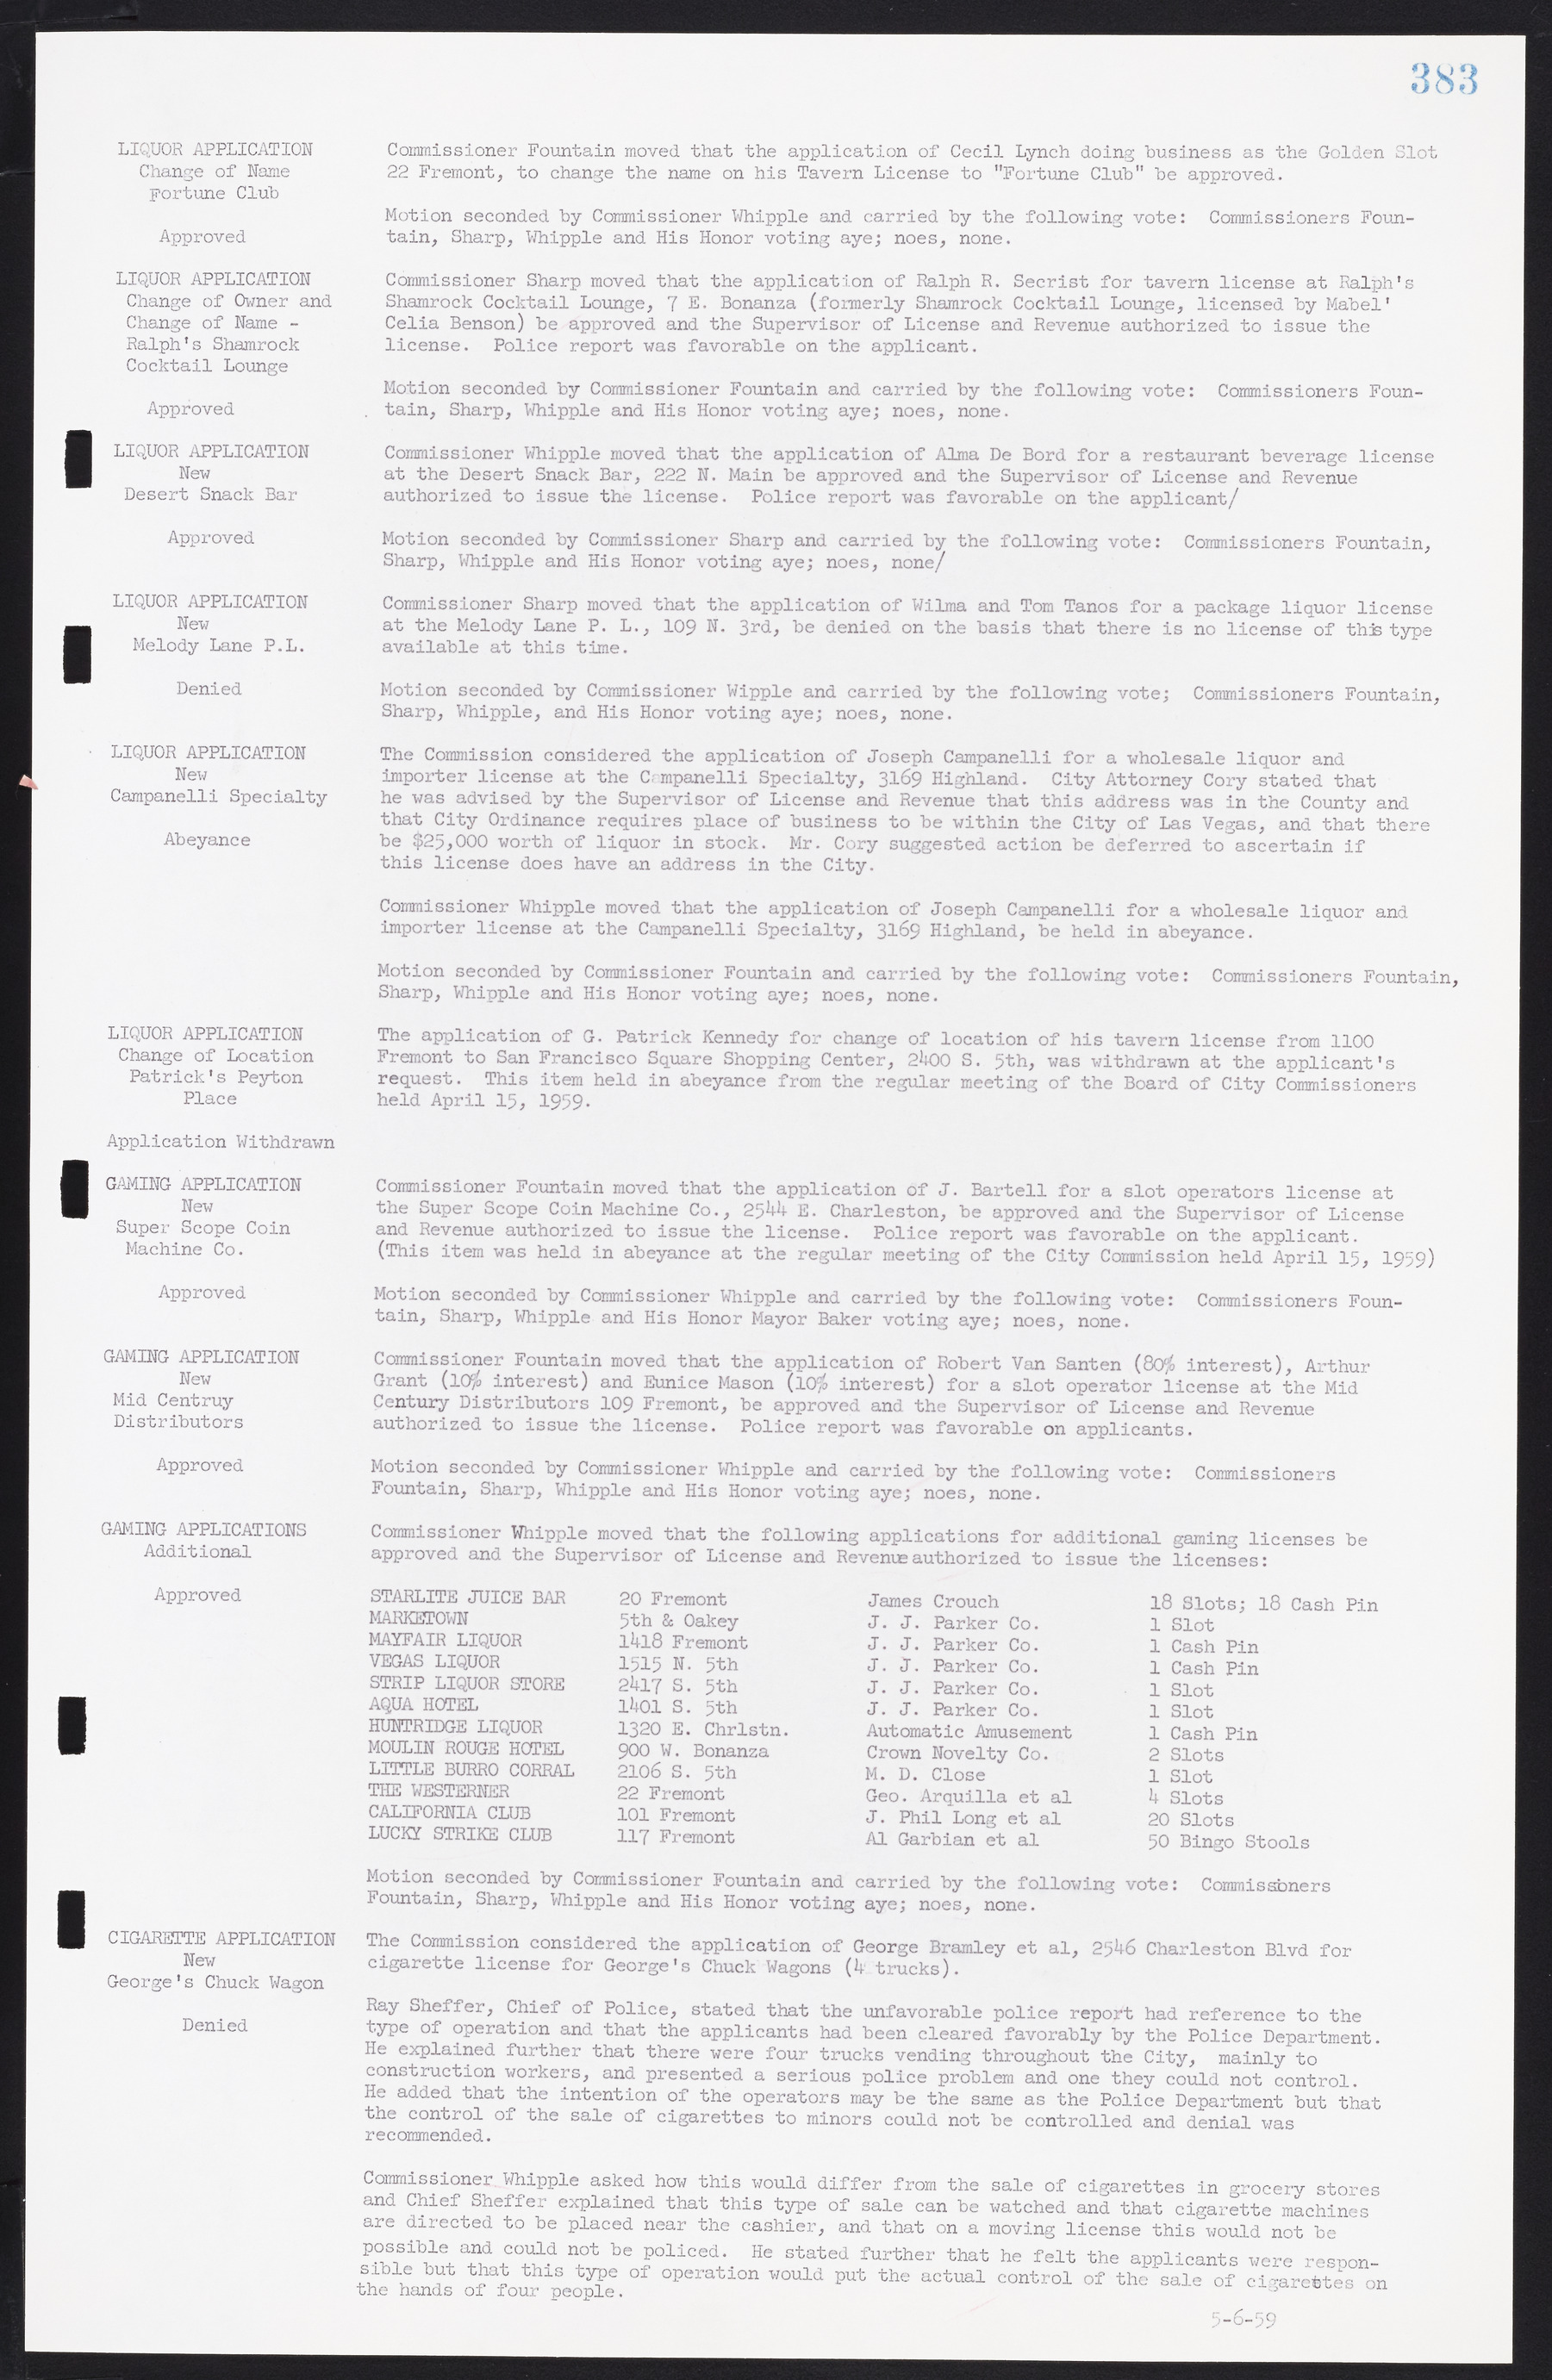 Las Vegas City Commission Minutes, November 20, 1957 to December 2, 1959, lvc000011-419